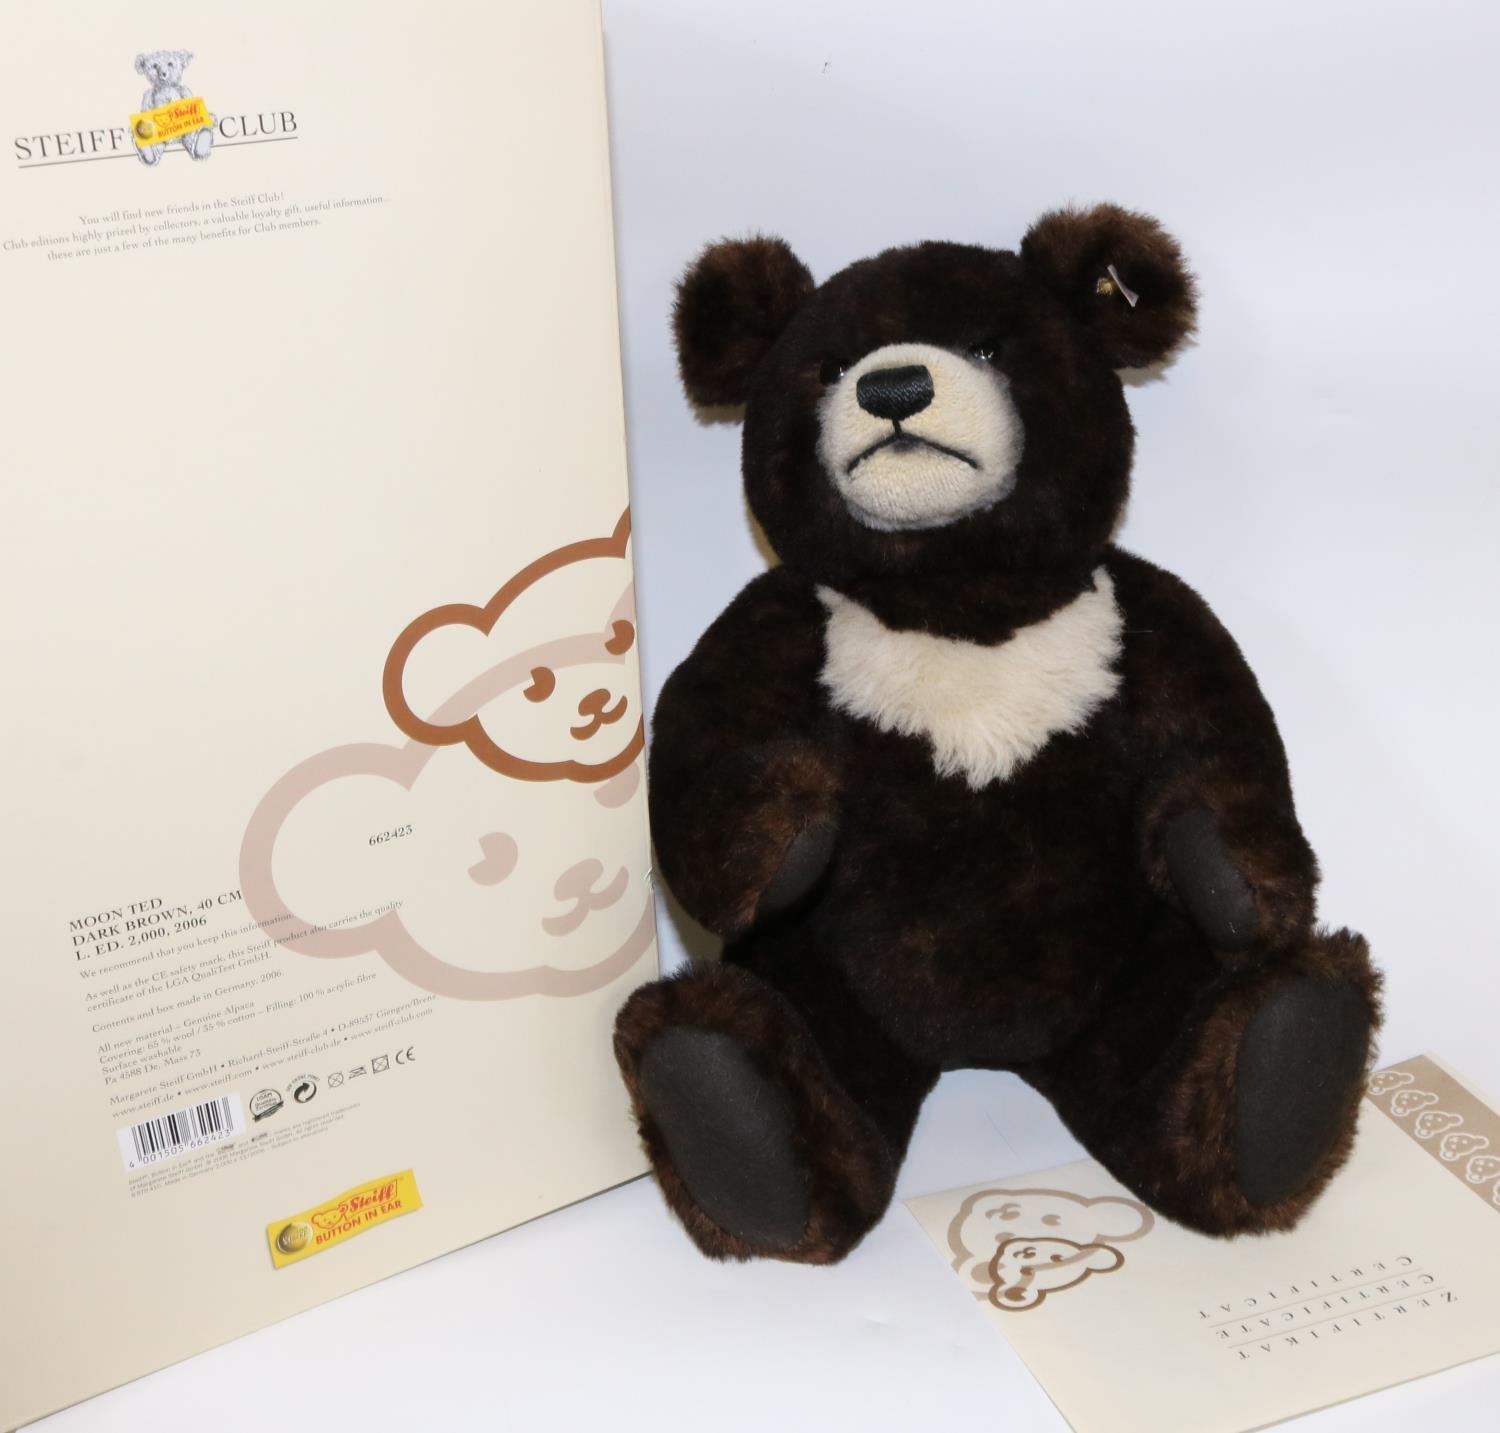 Steiff Moon Ted, white tag 662423, limited edition 231/2000, dark brown and cream alpaca teddy bear,